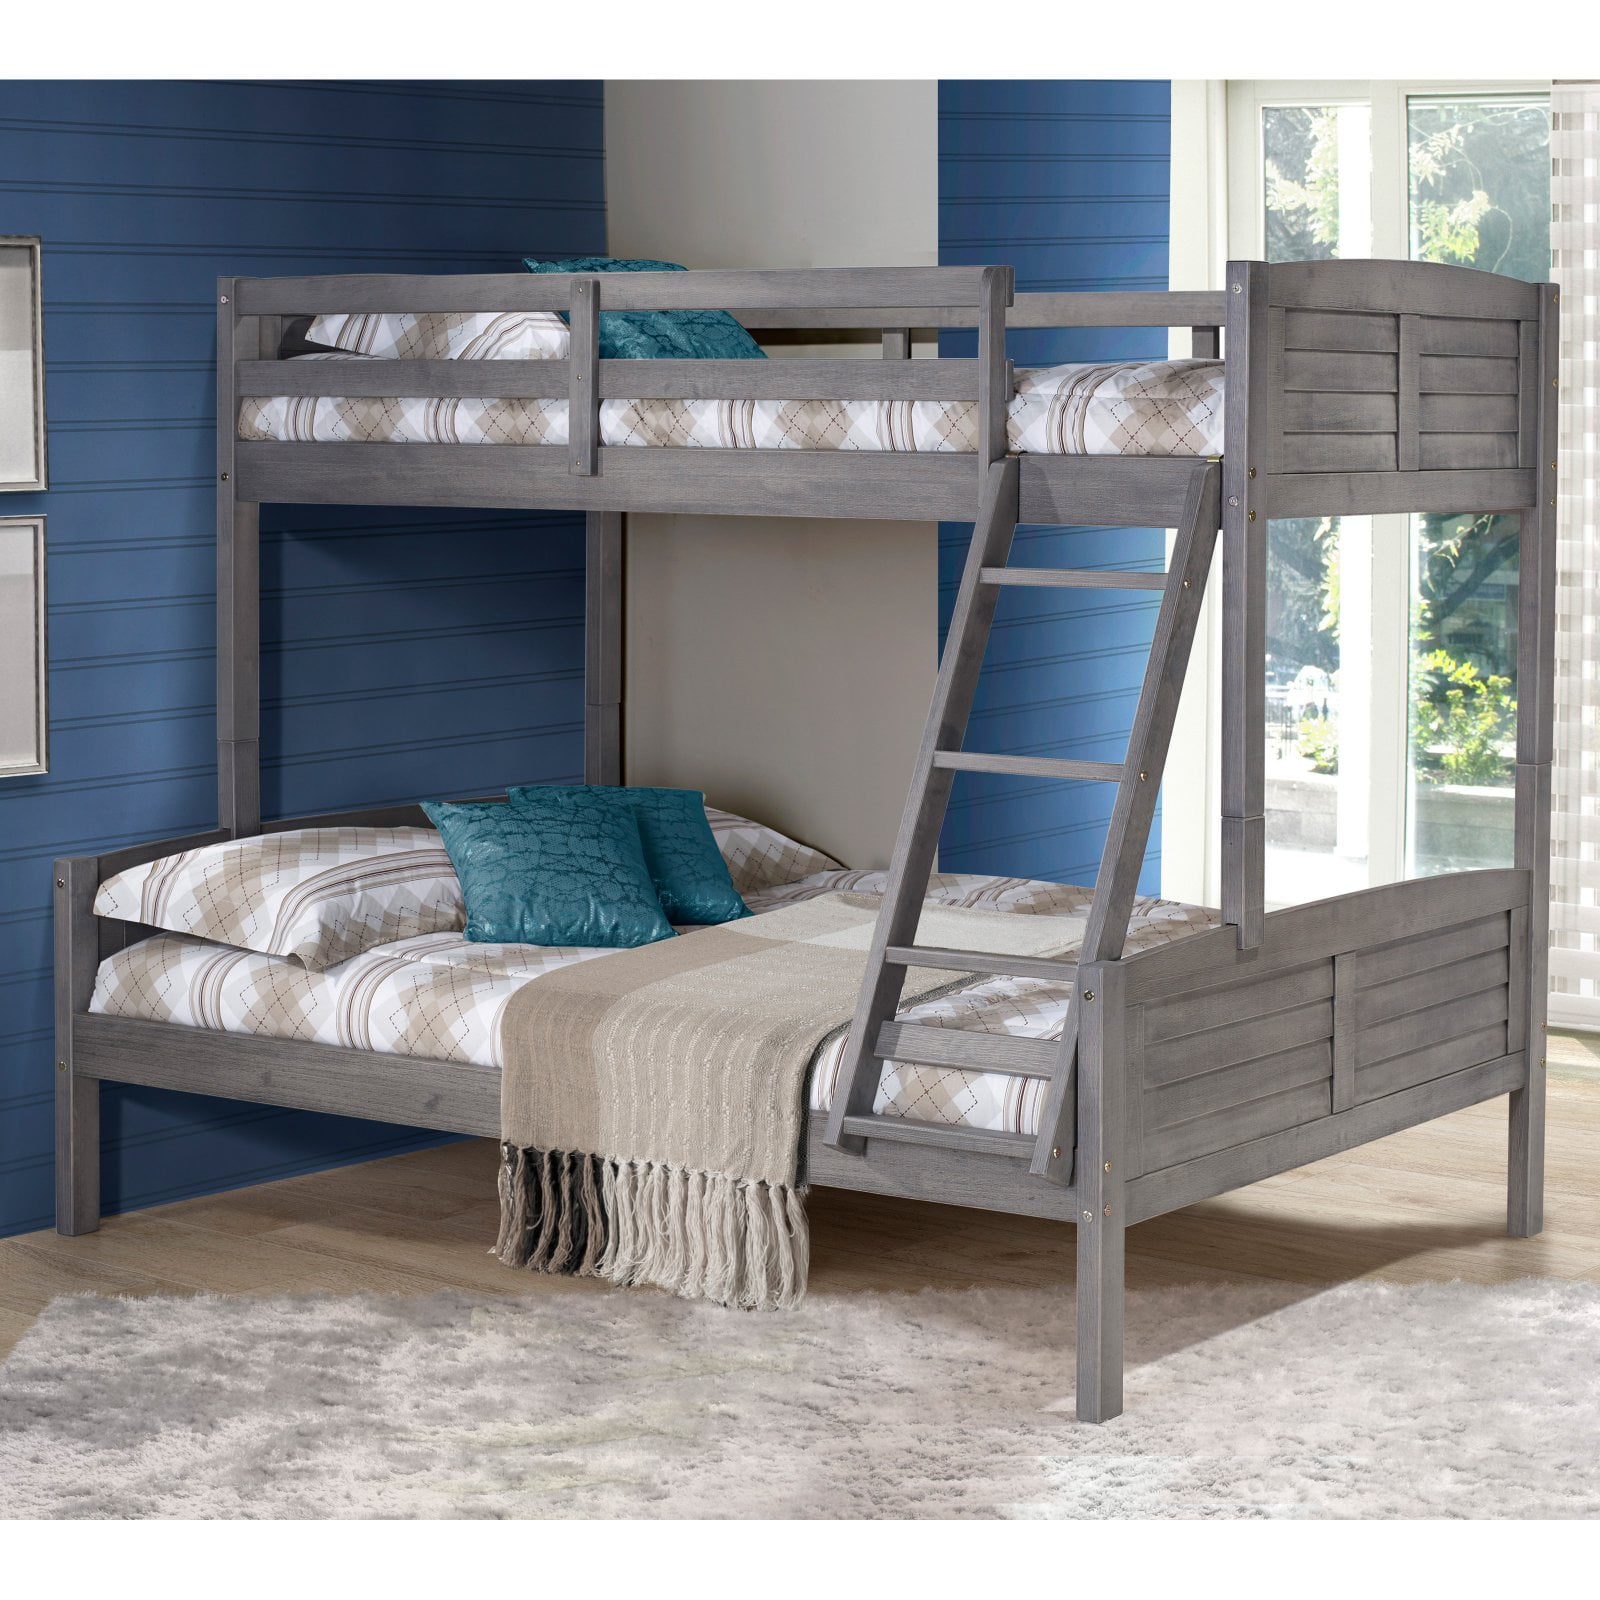 Donco Kids Louver Wood Bunk Bed Twin, Antique Bunk Beds